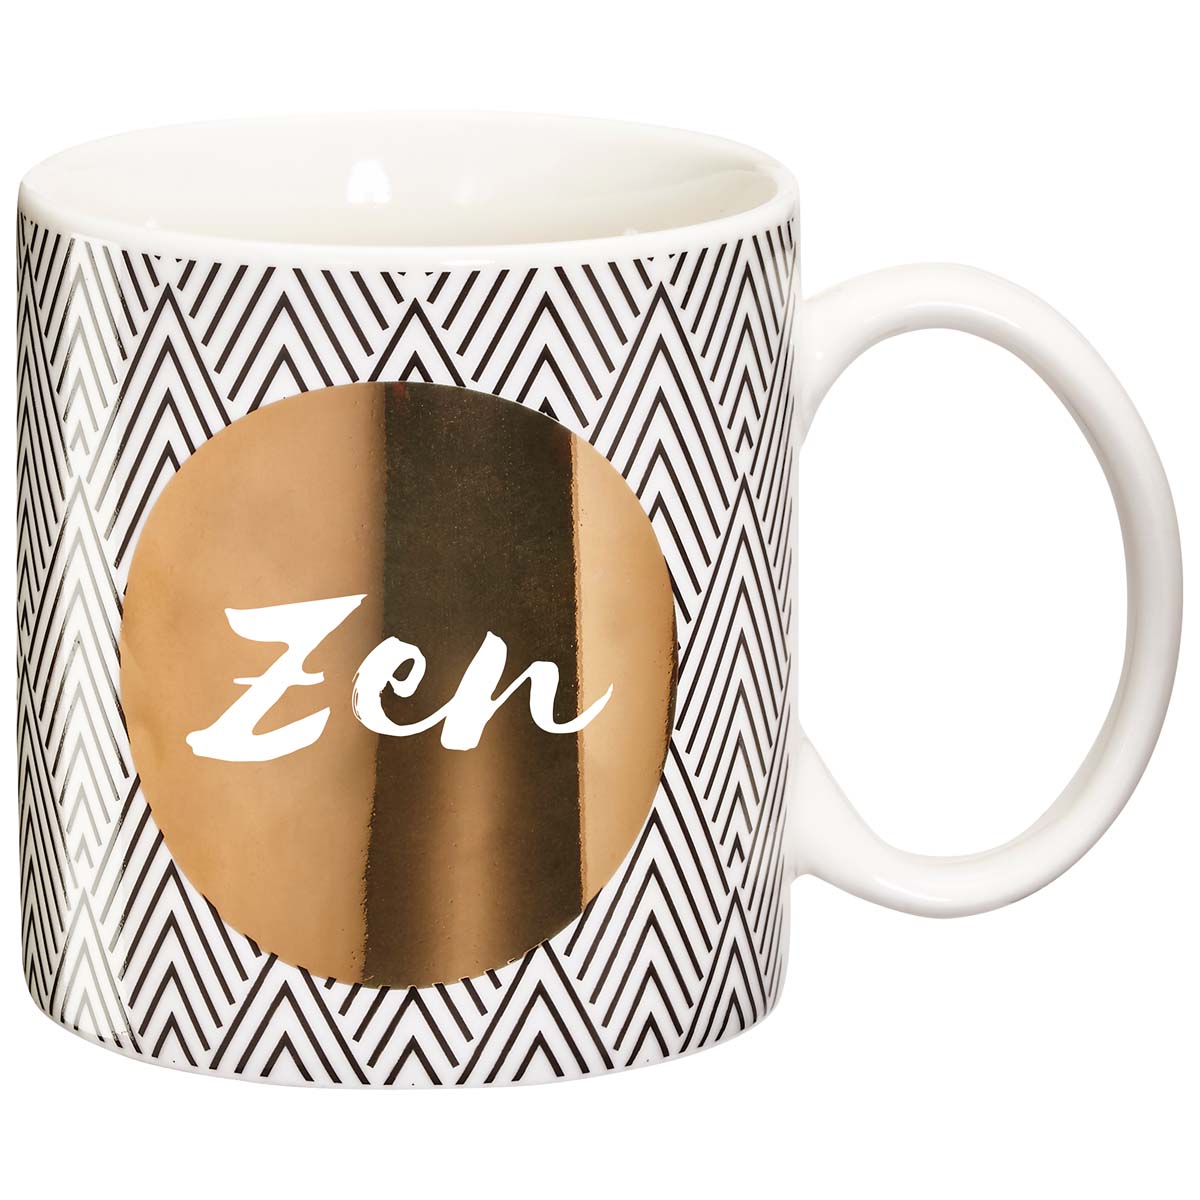 Zen gift mug